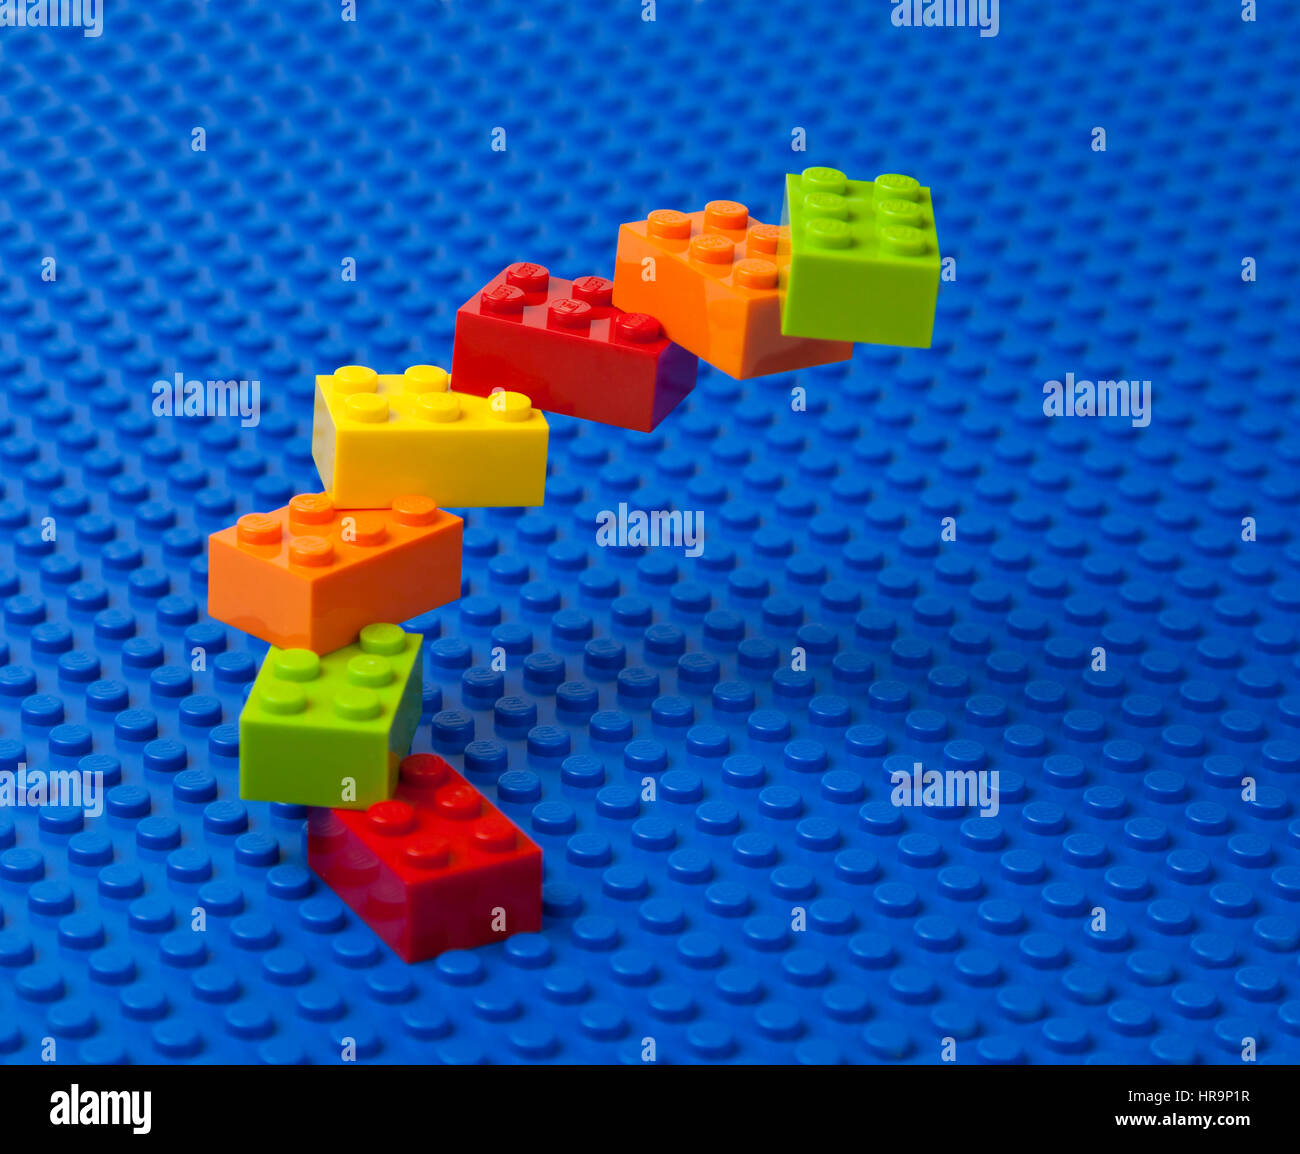 Upward spiral construction or staircase of interlocking Lego bricks on a blue Lego base plate. Stock Photo